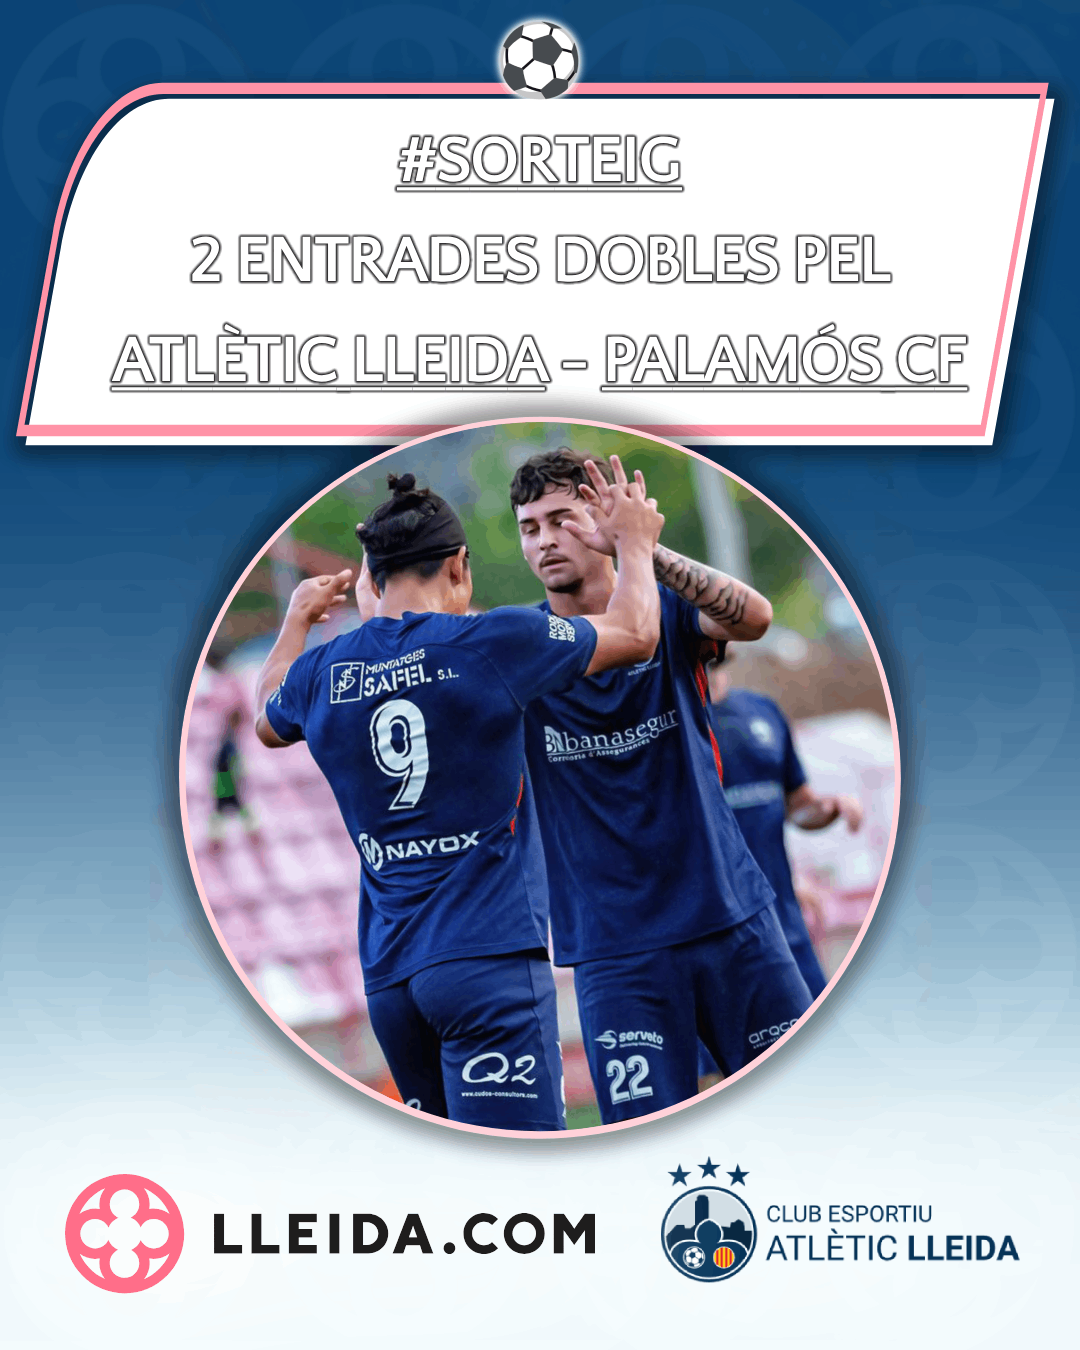 Atlètic Lleida - Palamós CF